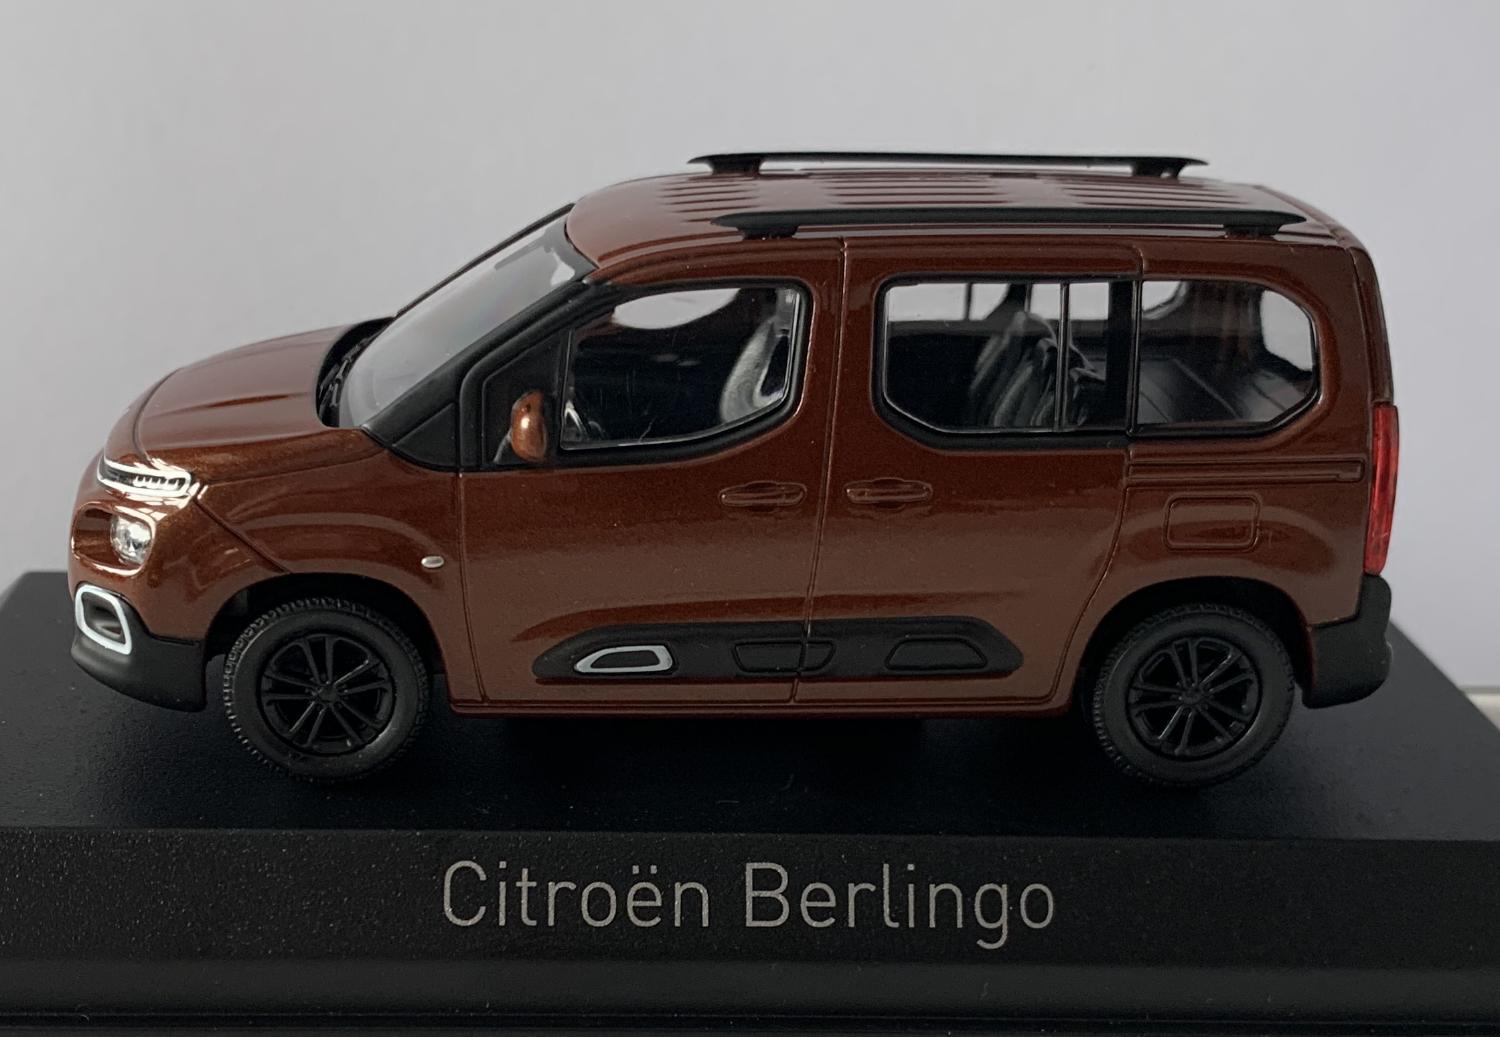 Citroen Berlingo 2020 in metallic copper 1:43 scale model from Norev, 155765